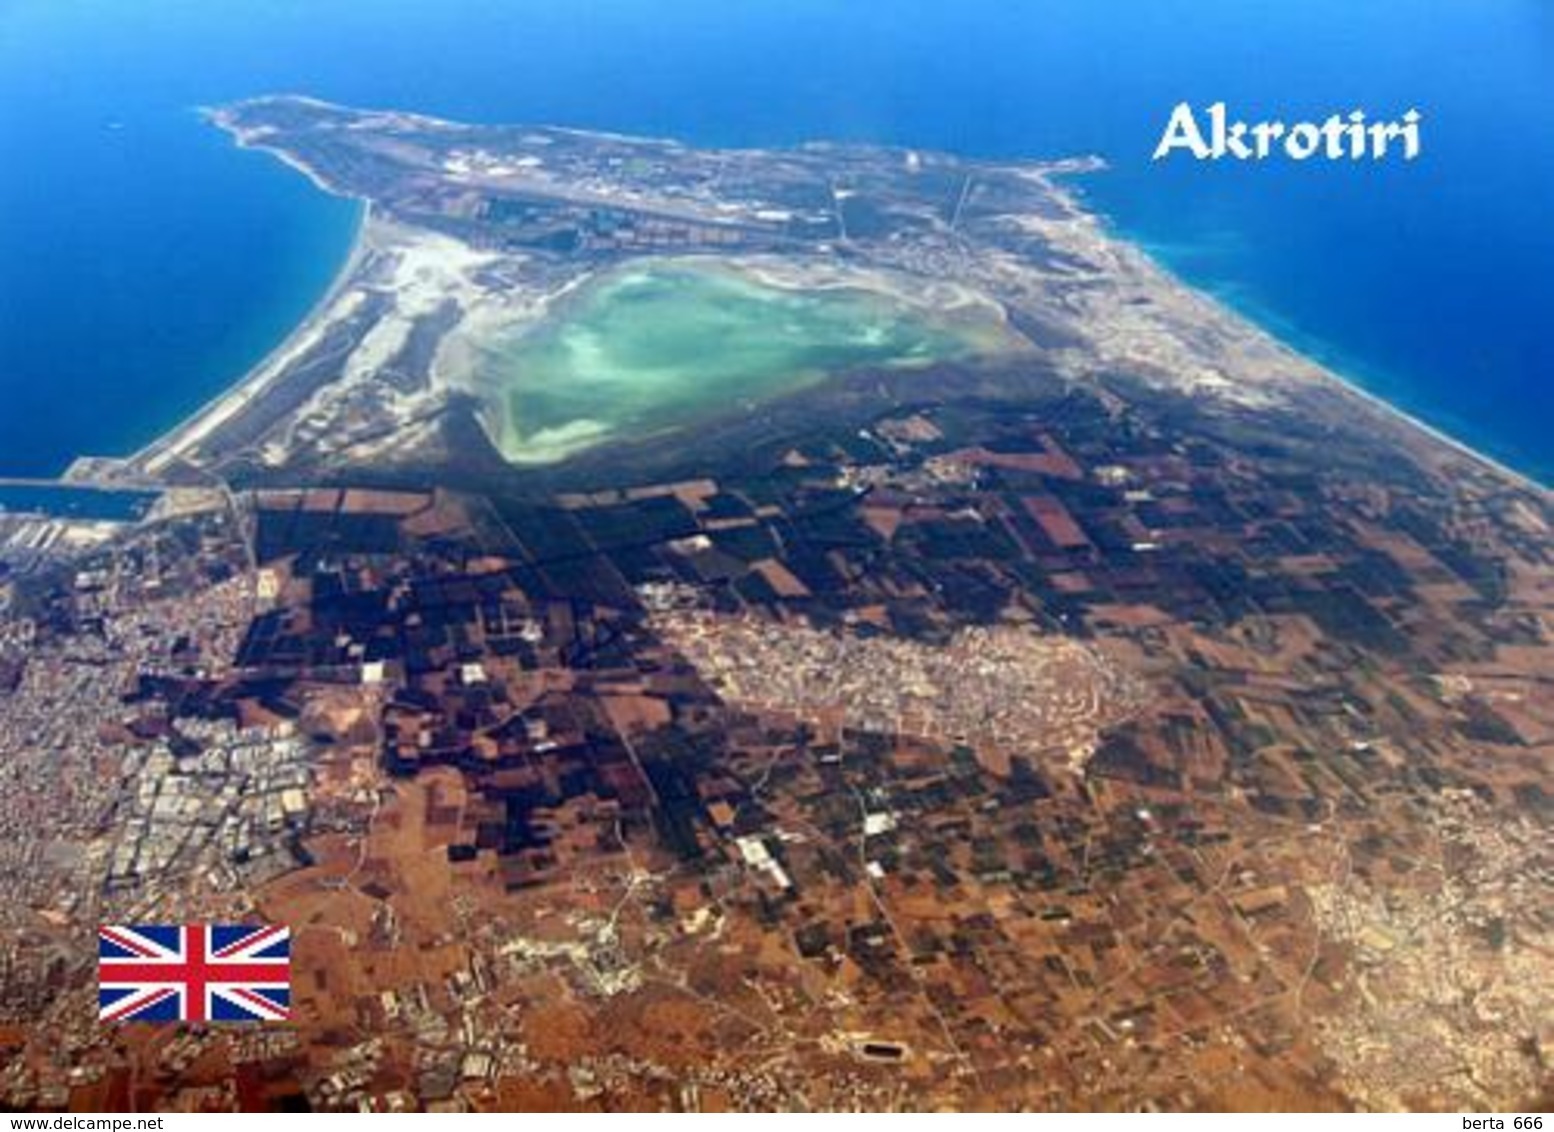 Akrotiri British Sovereign Base Aerial View Cyprus New Postcard Zypern AK - Zypern